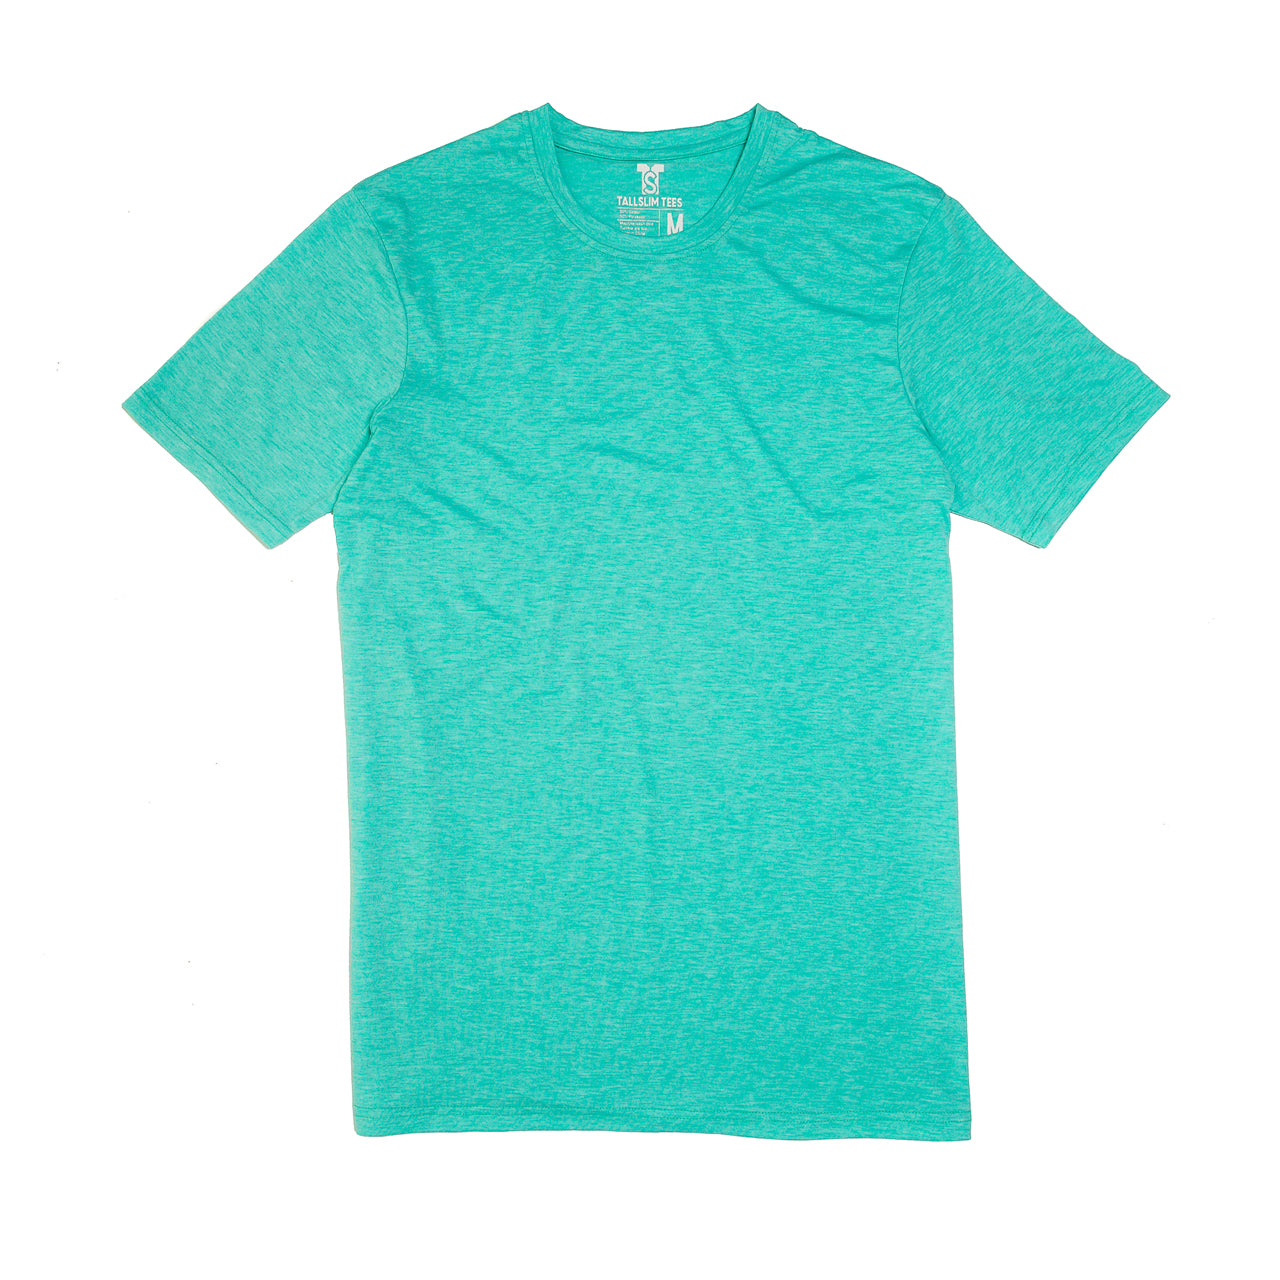 Turquoise Crew Neck Shirt for Tall Slim Men